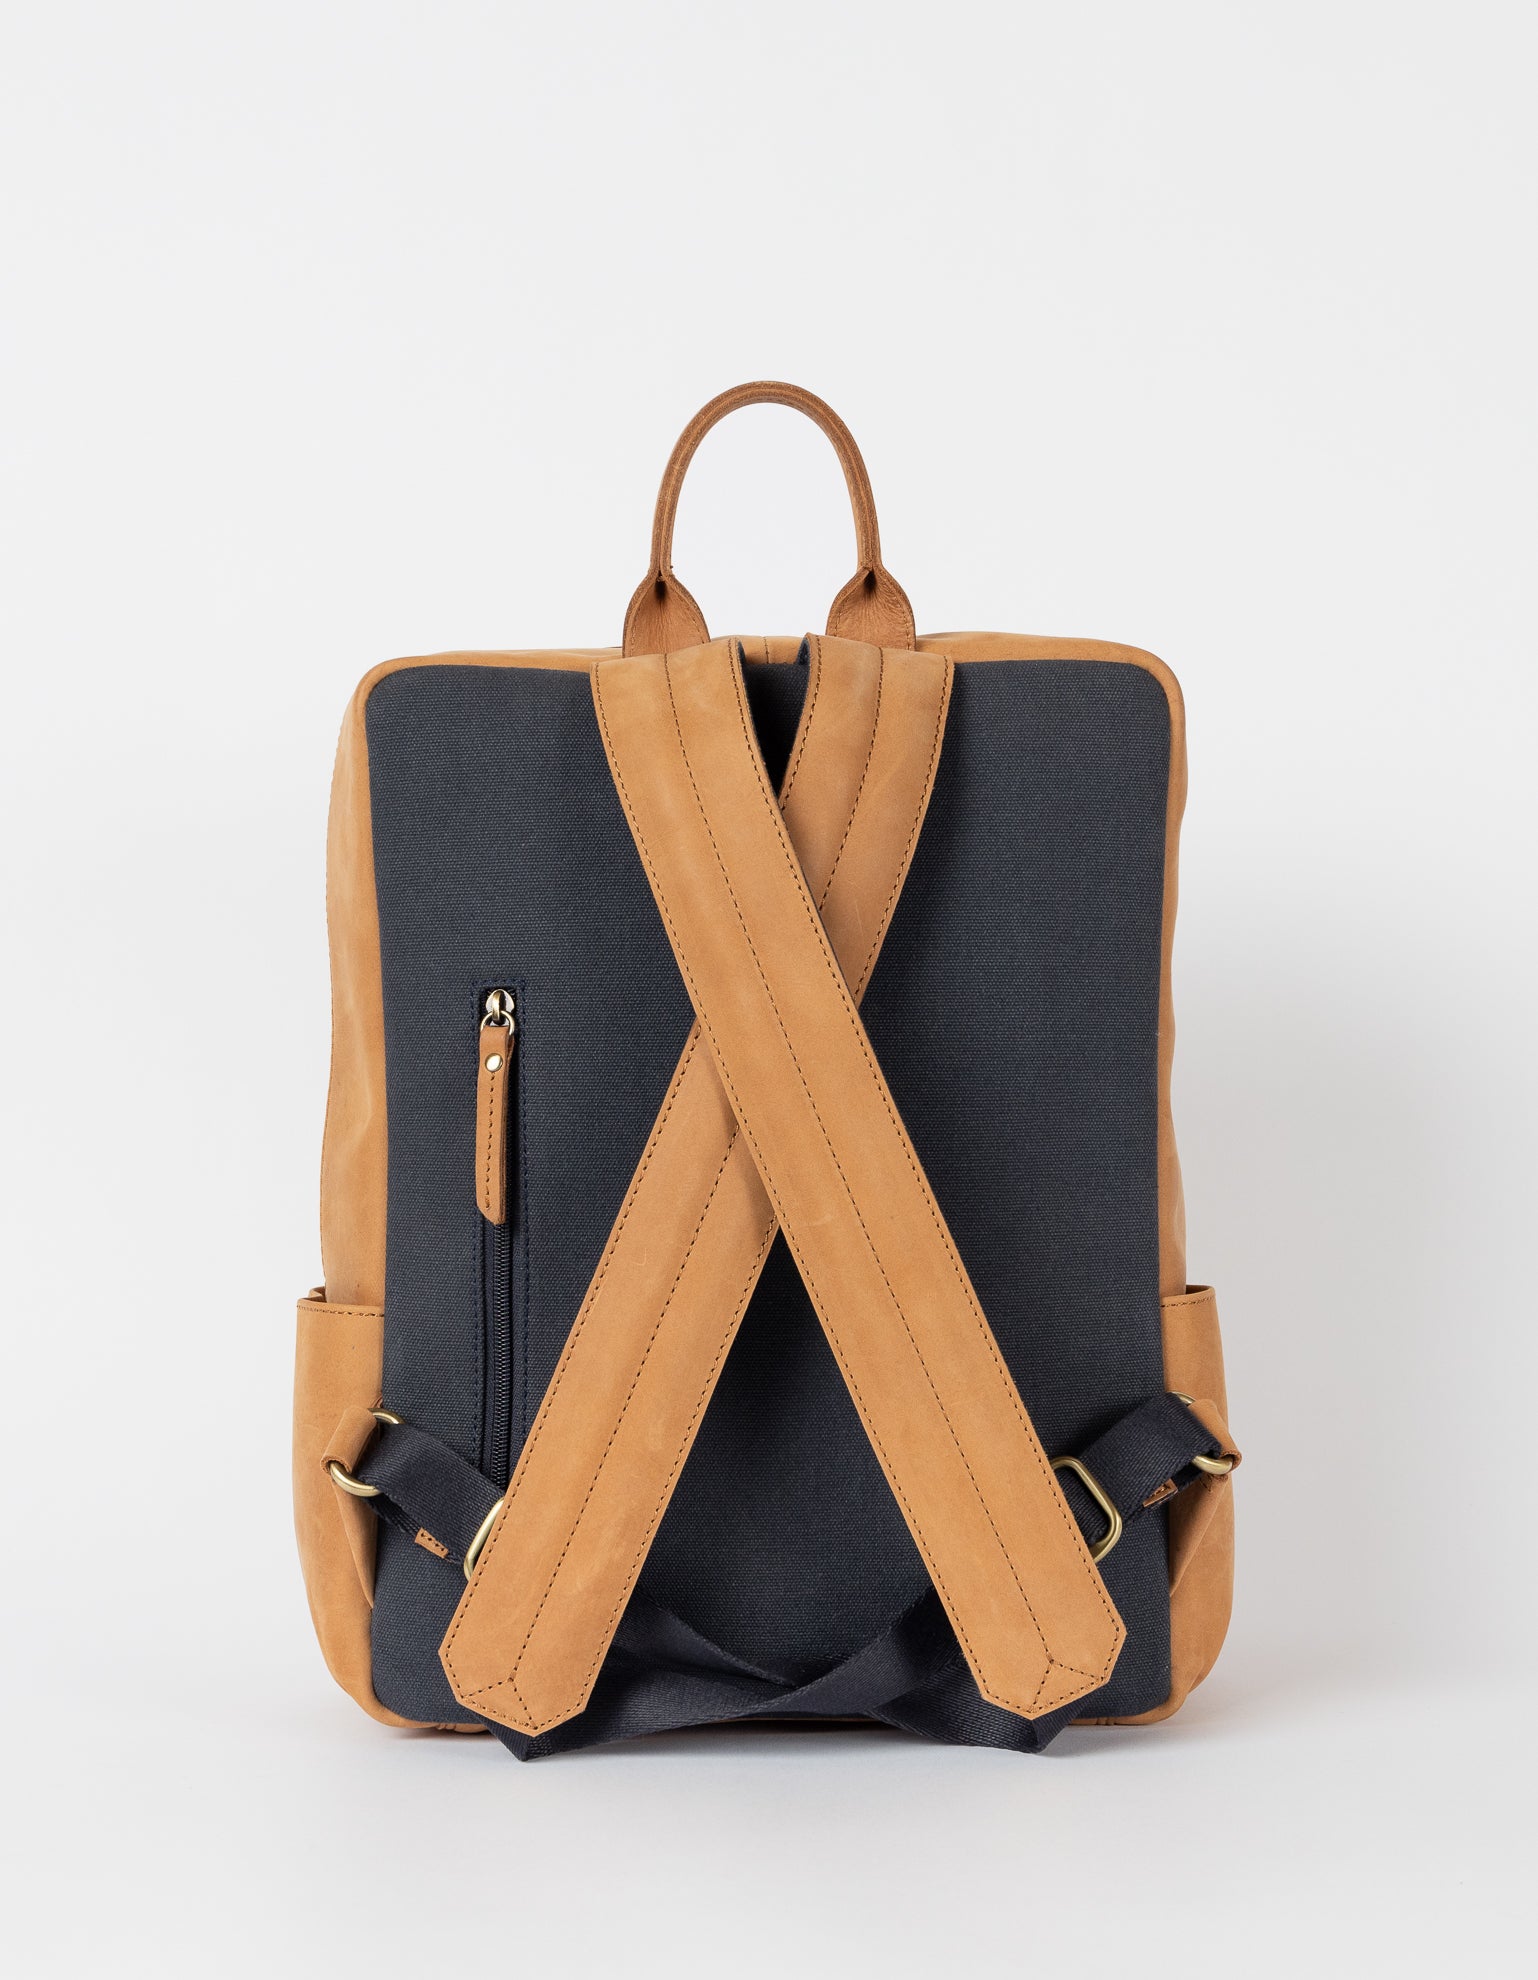 Camel Leather backpack. Back product image.